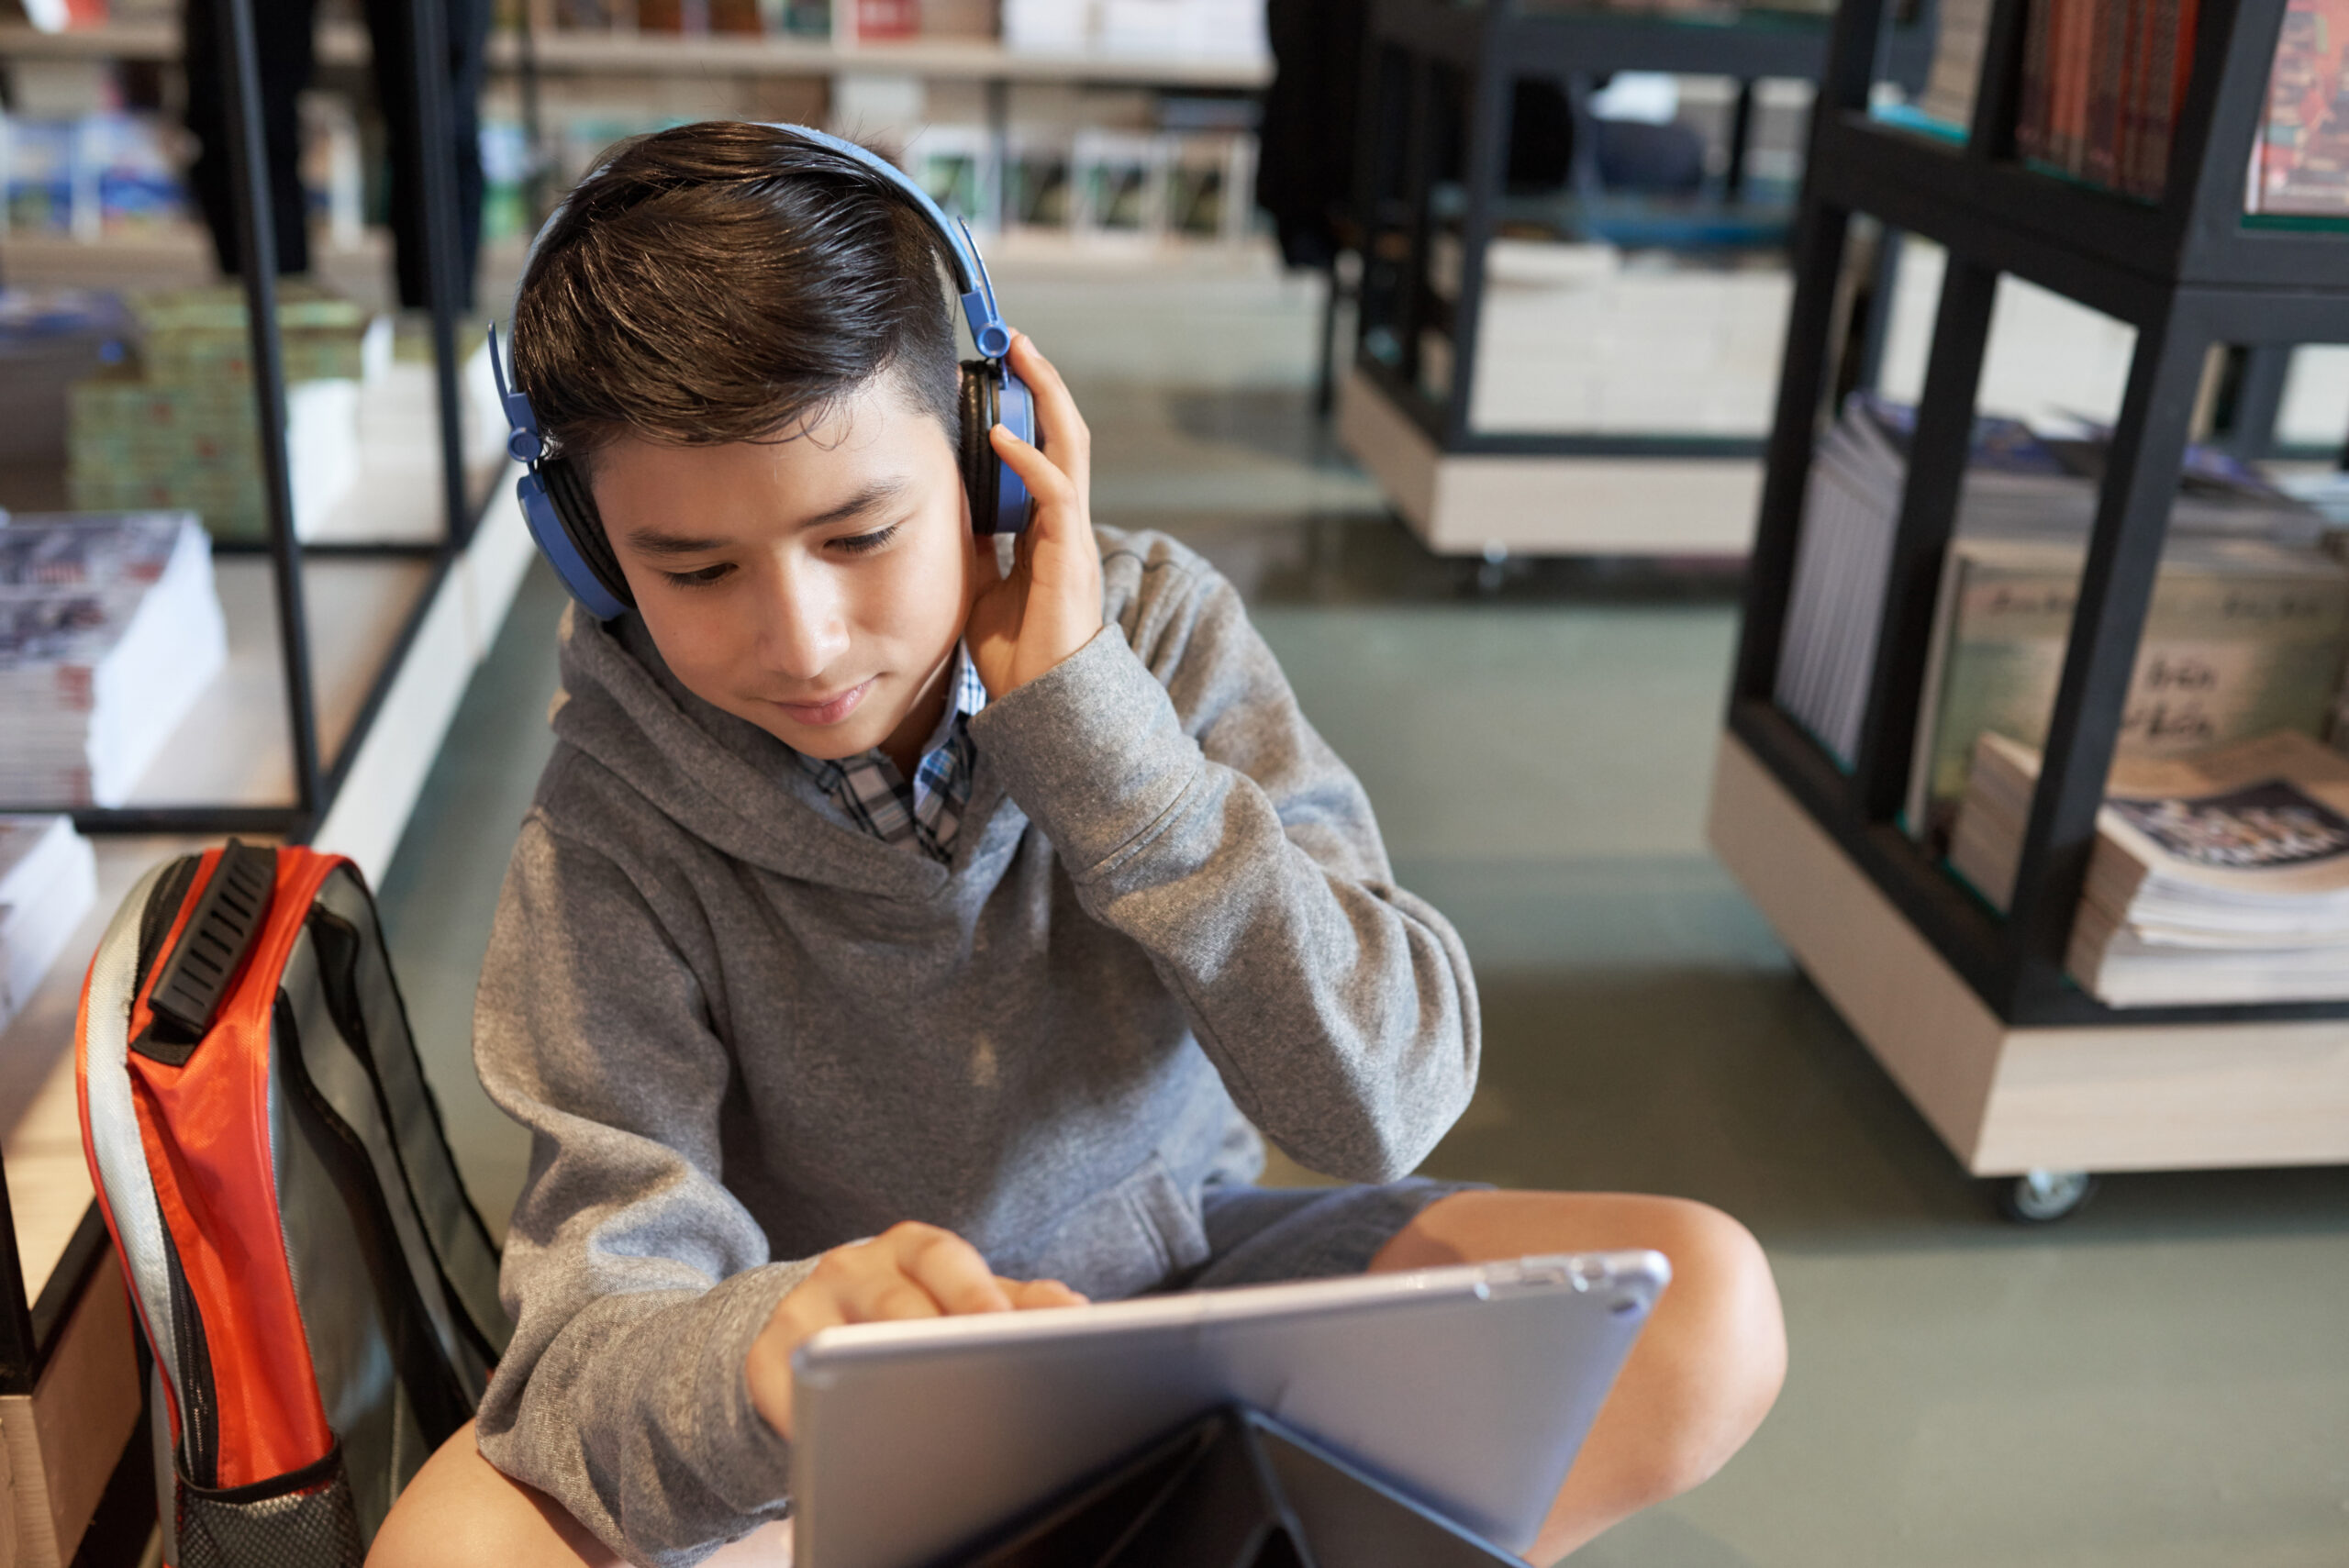 A teenage boy wearing headphones completes online work in the school library.